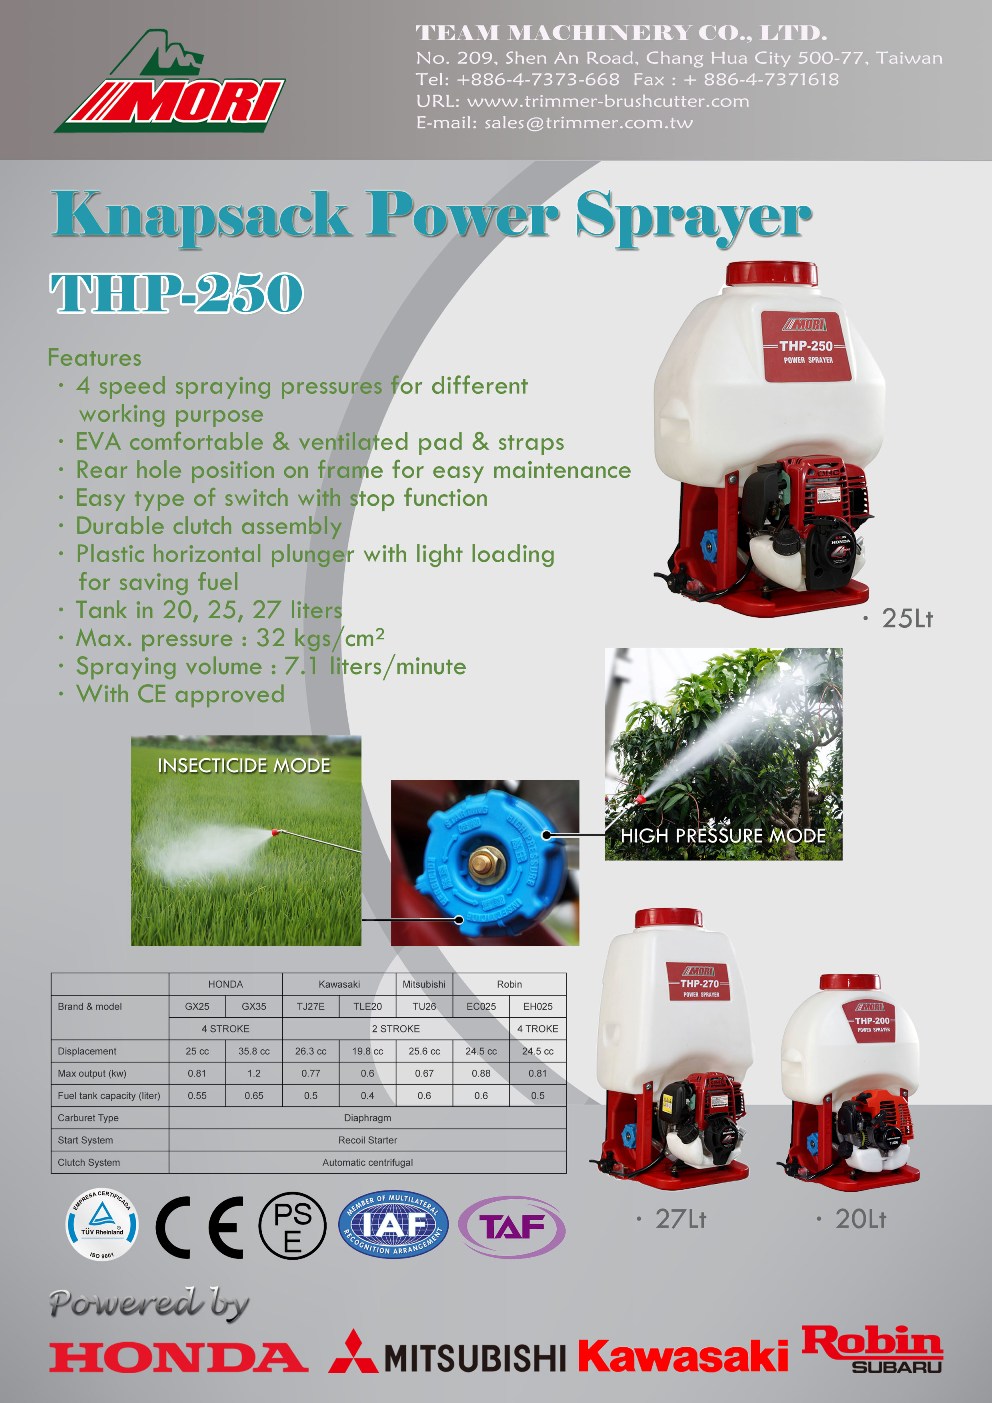 Knapsack Type Power Sprayer